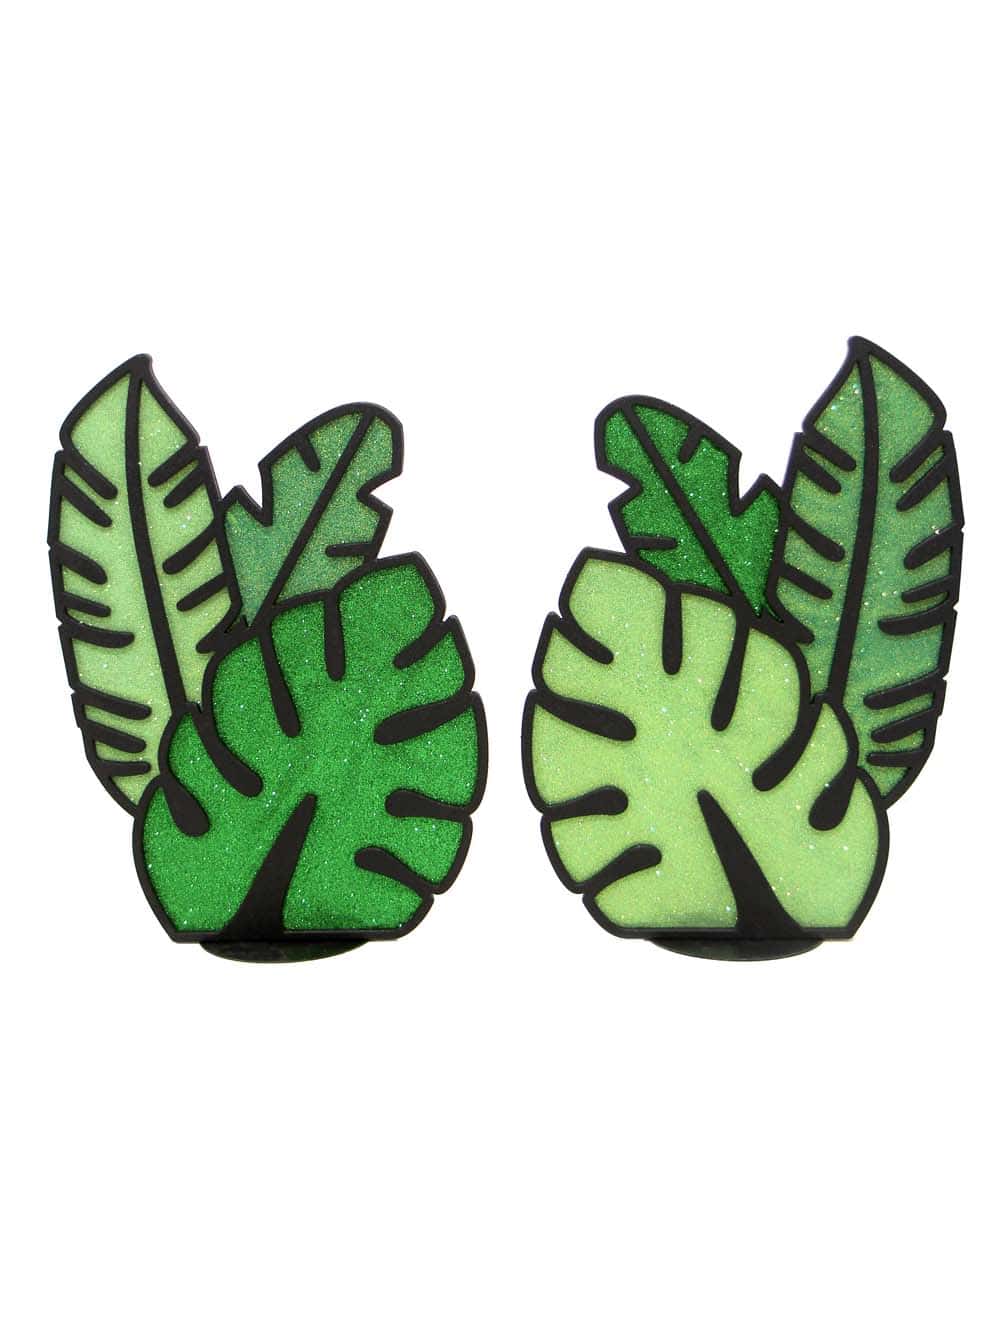 Jungle Leaf Set - LHS Large (Green)